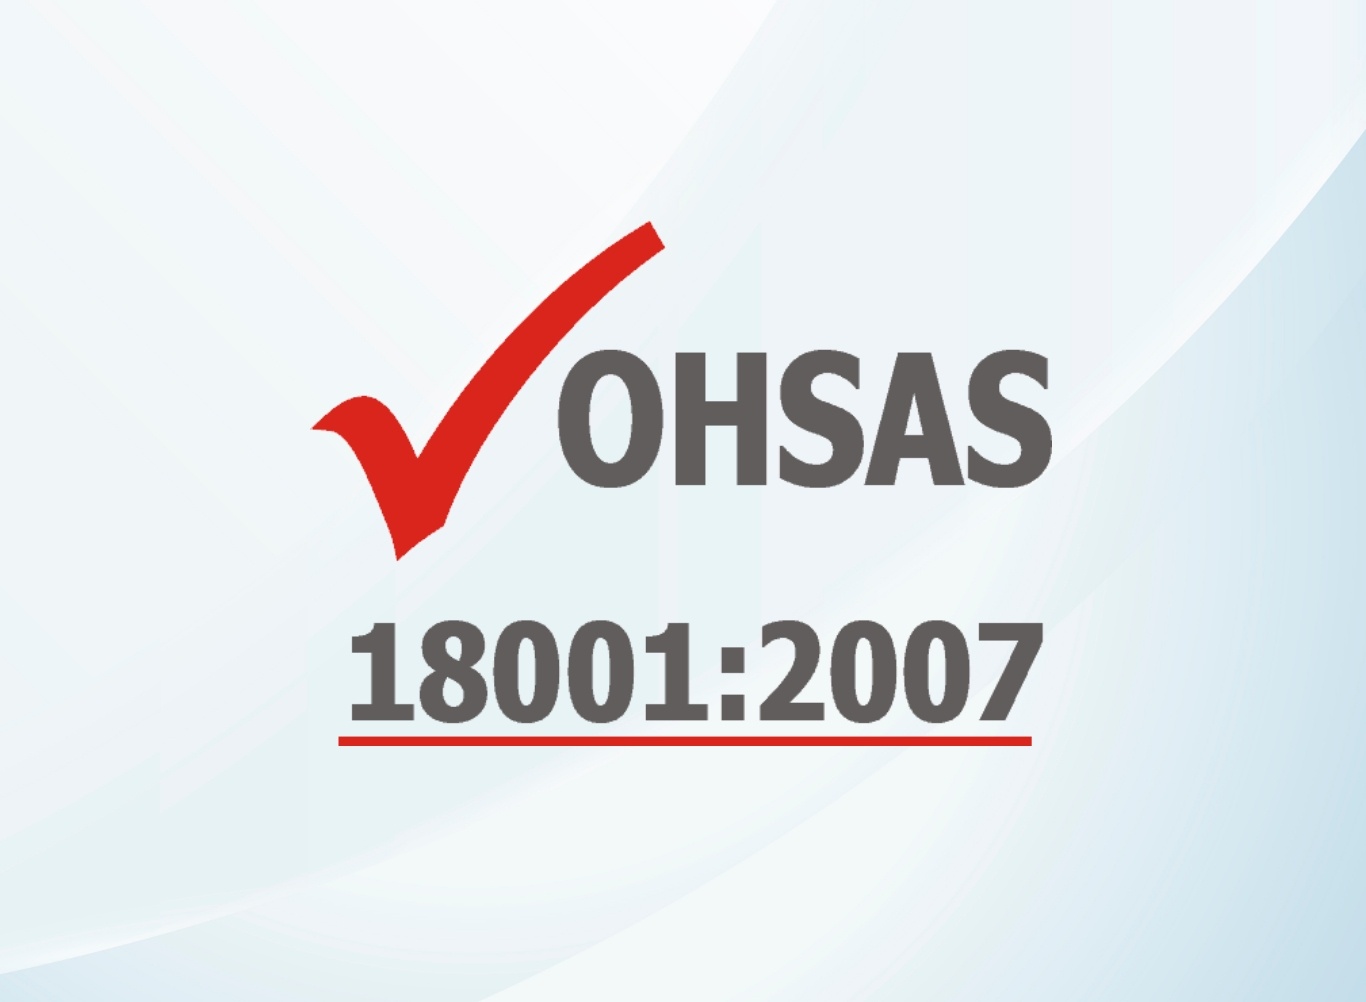 Certificate OHSAS 18001:2007.